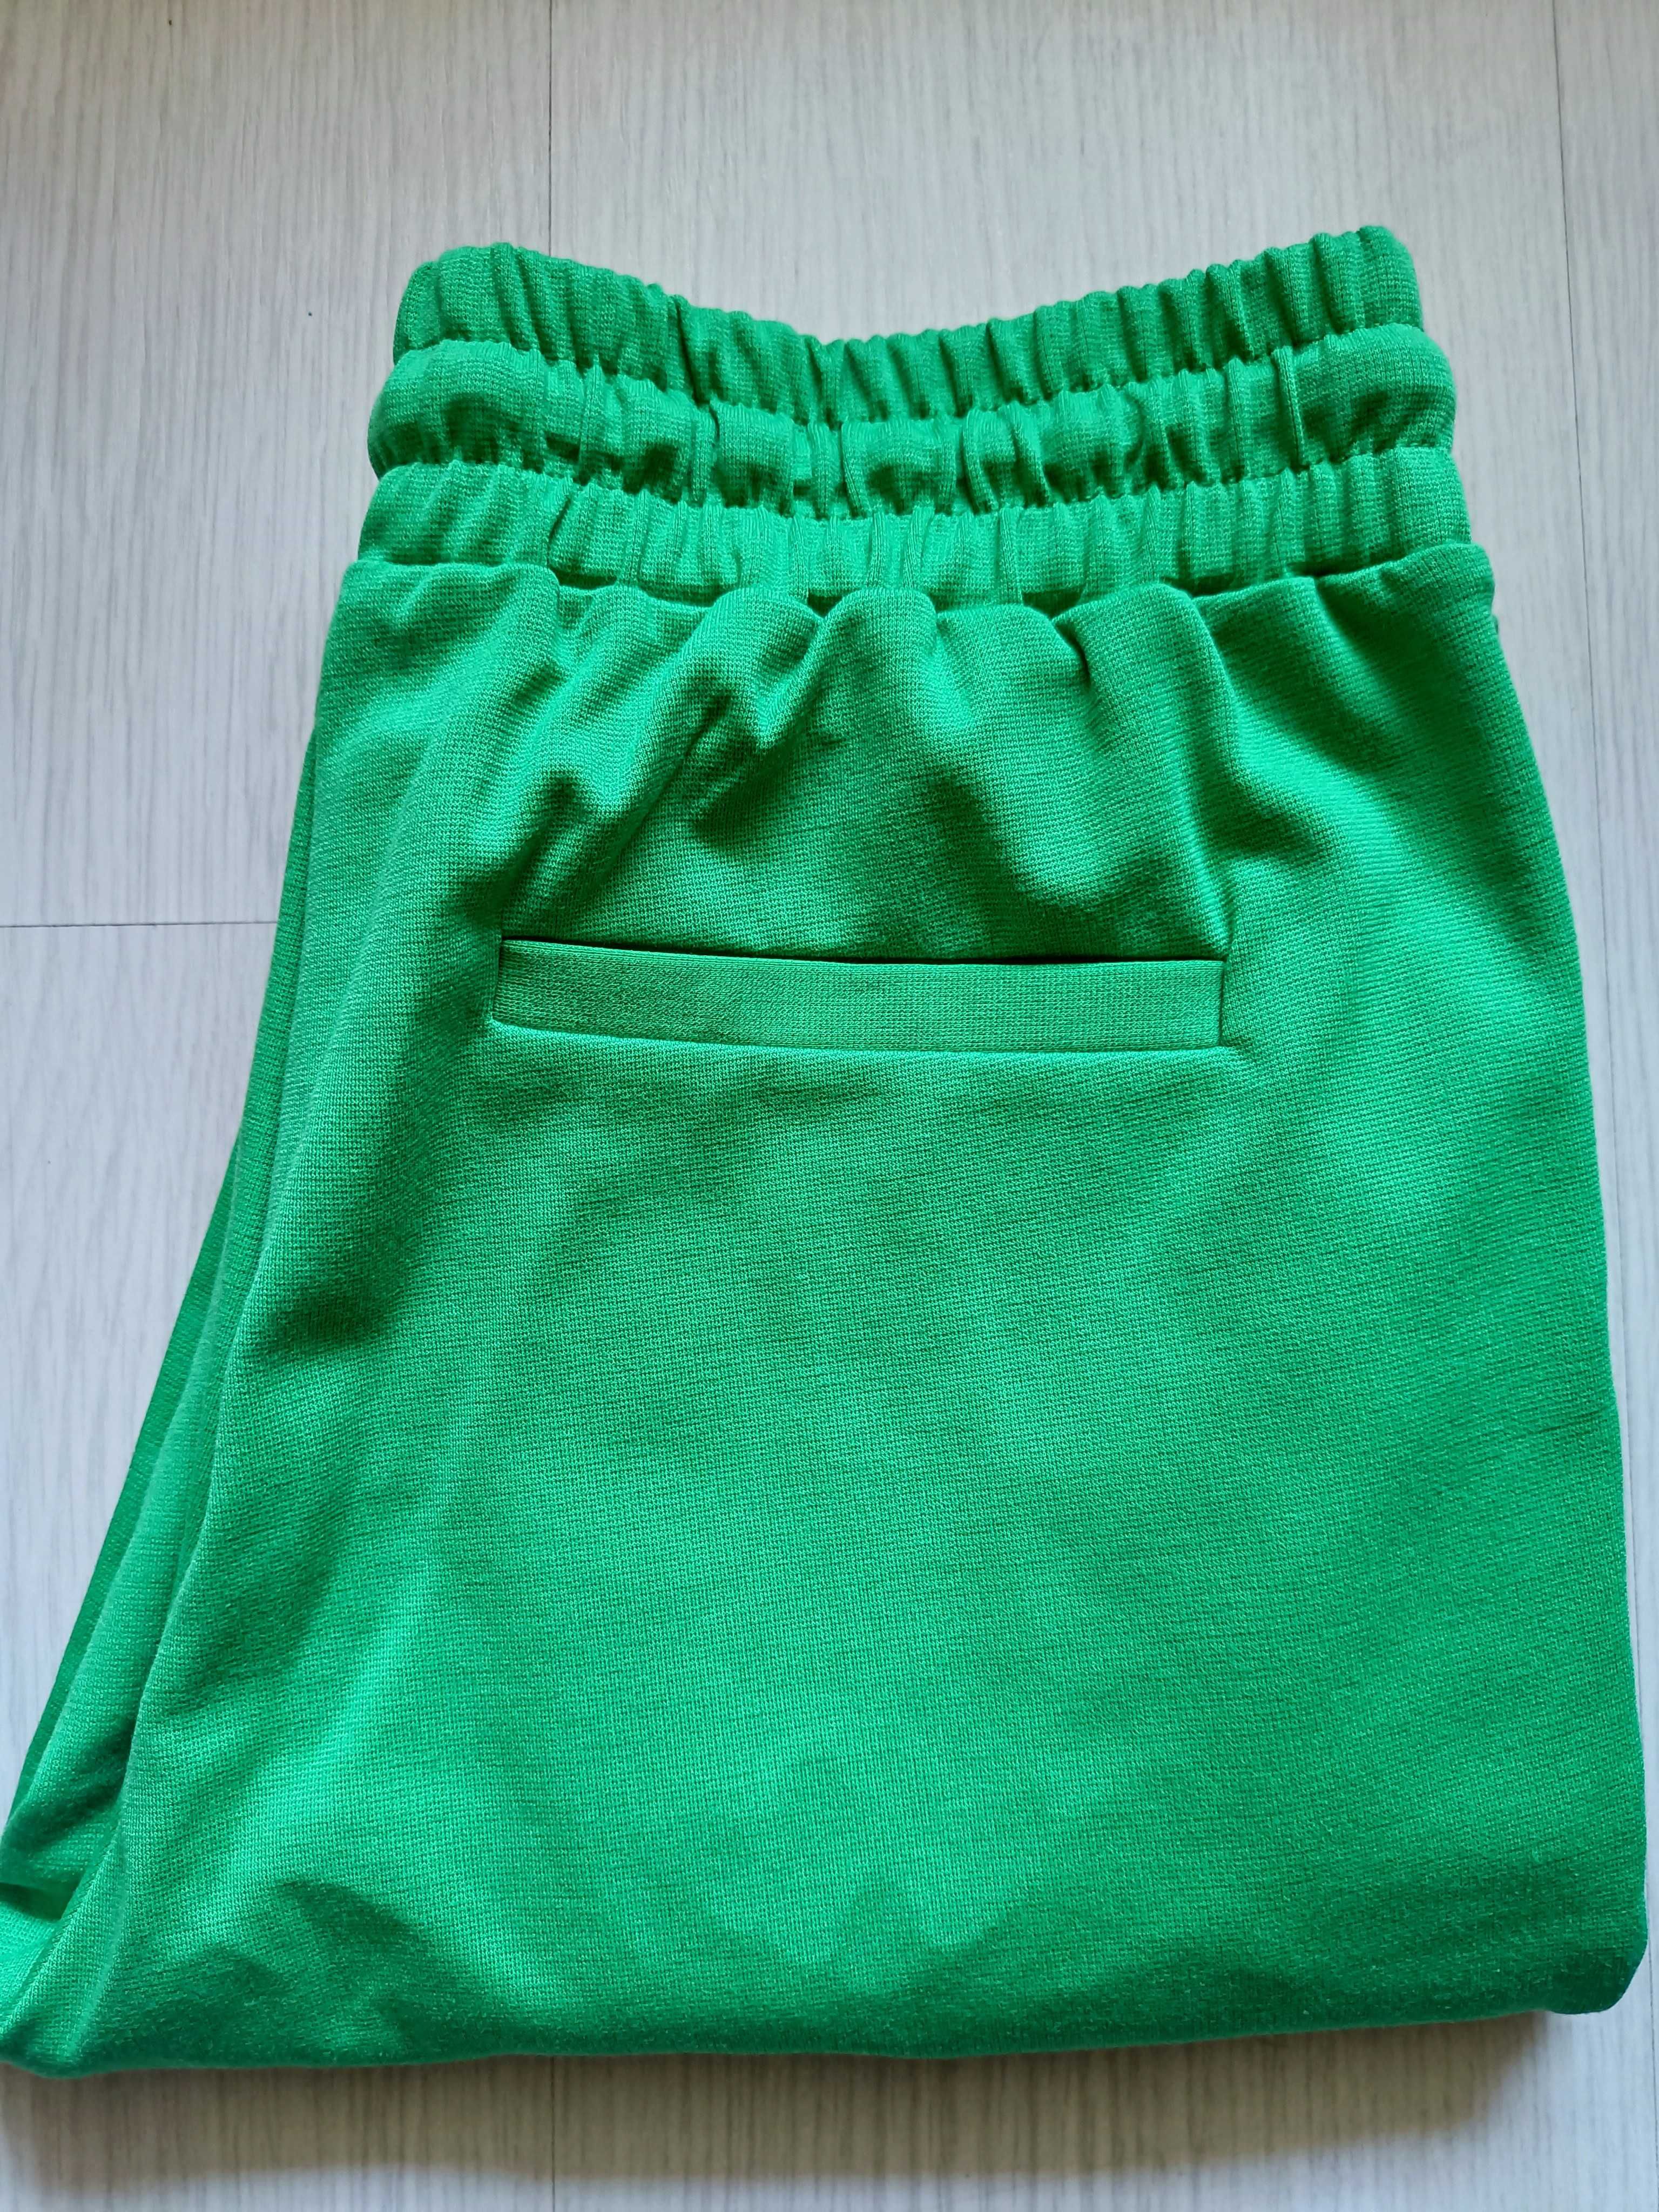 Ichi Kate Jogger Style Trousers, Kelly Green/Панталон ICHI цвят зелен